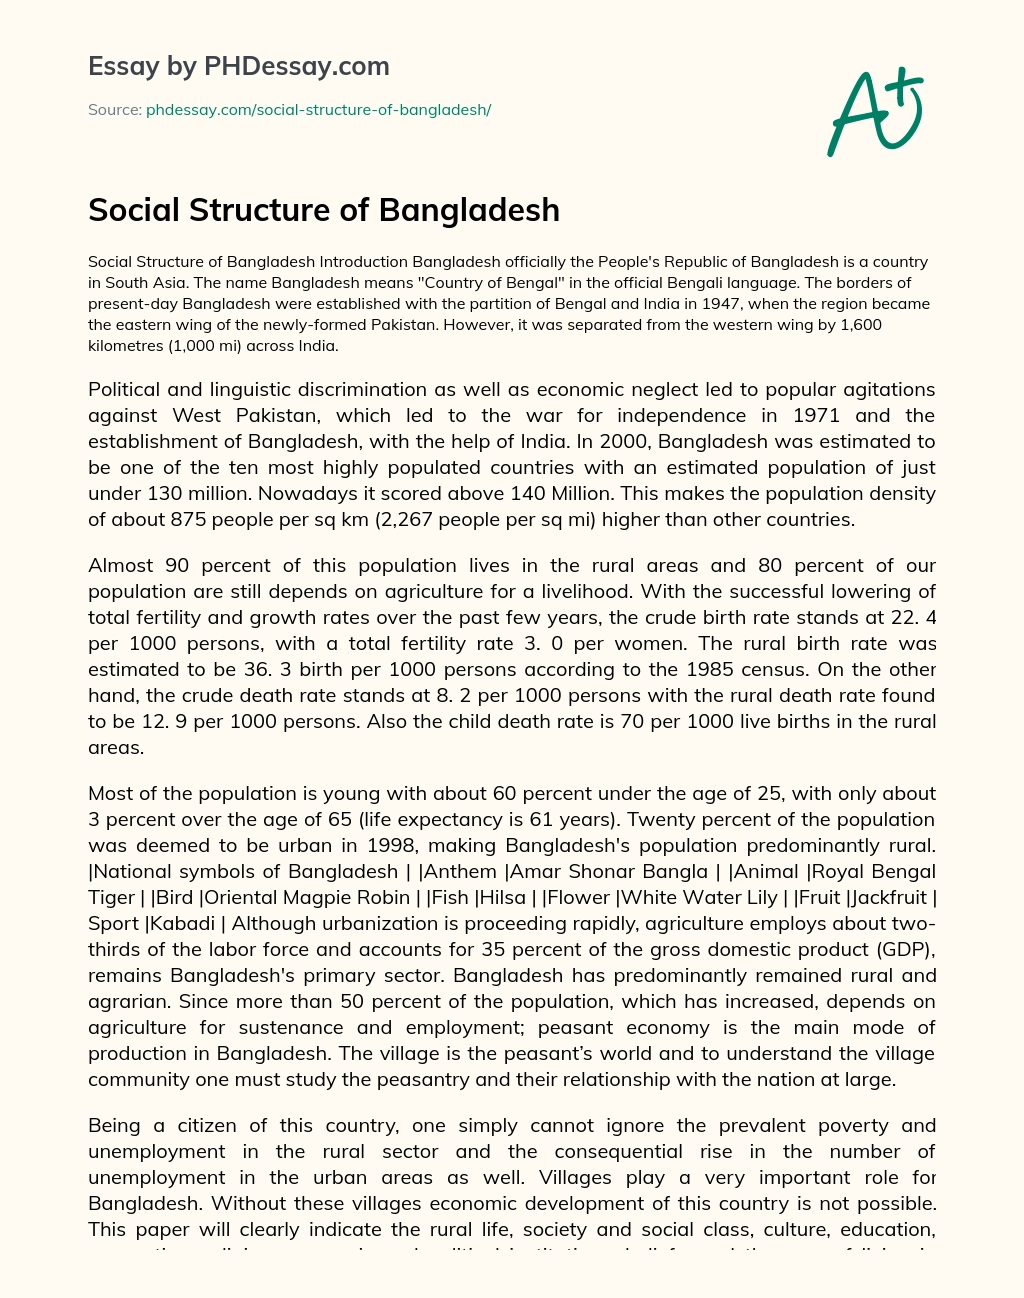 Social Structure of Bangladesh essay